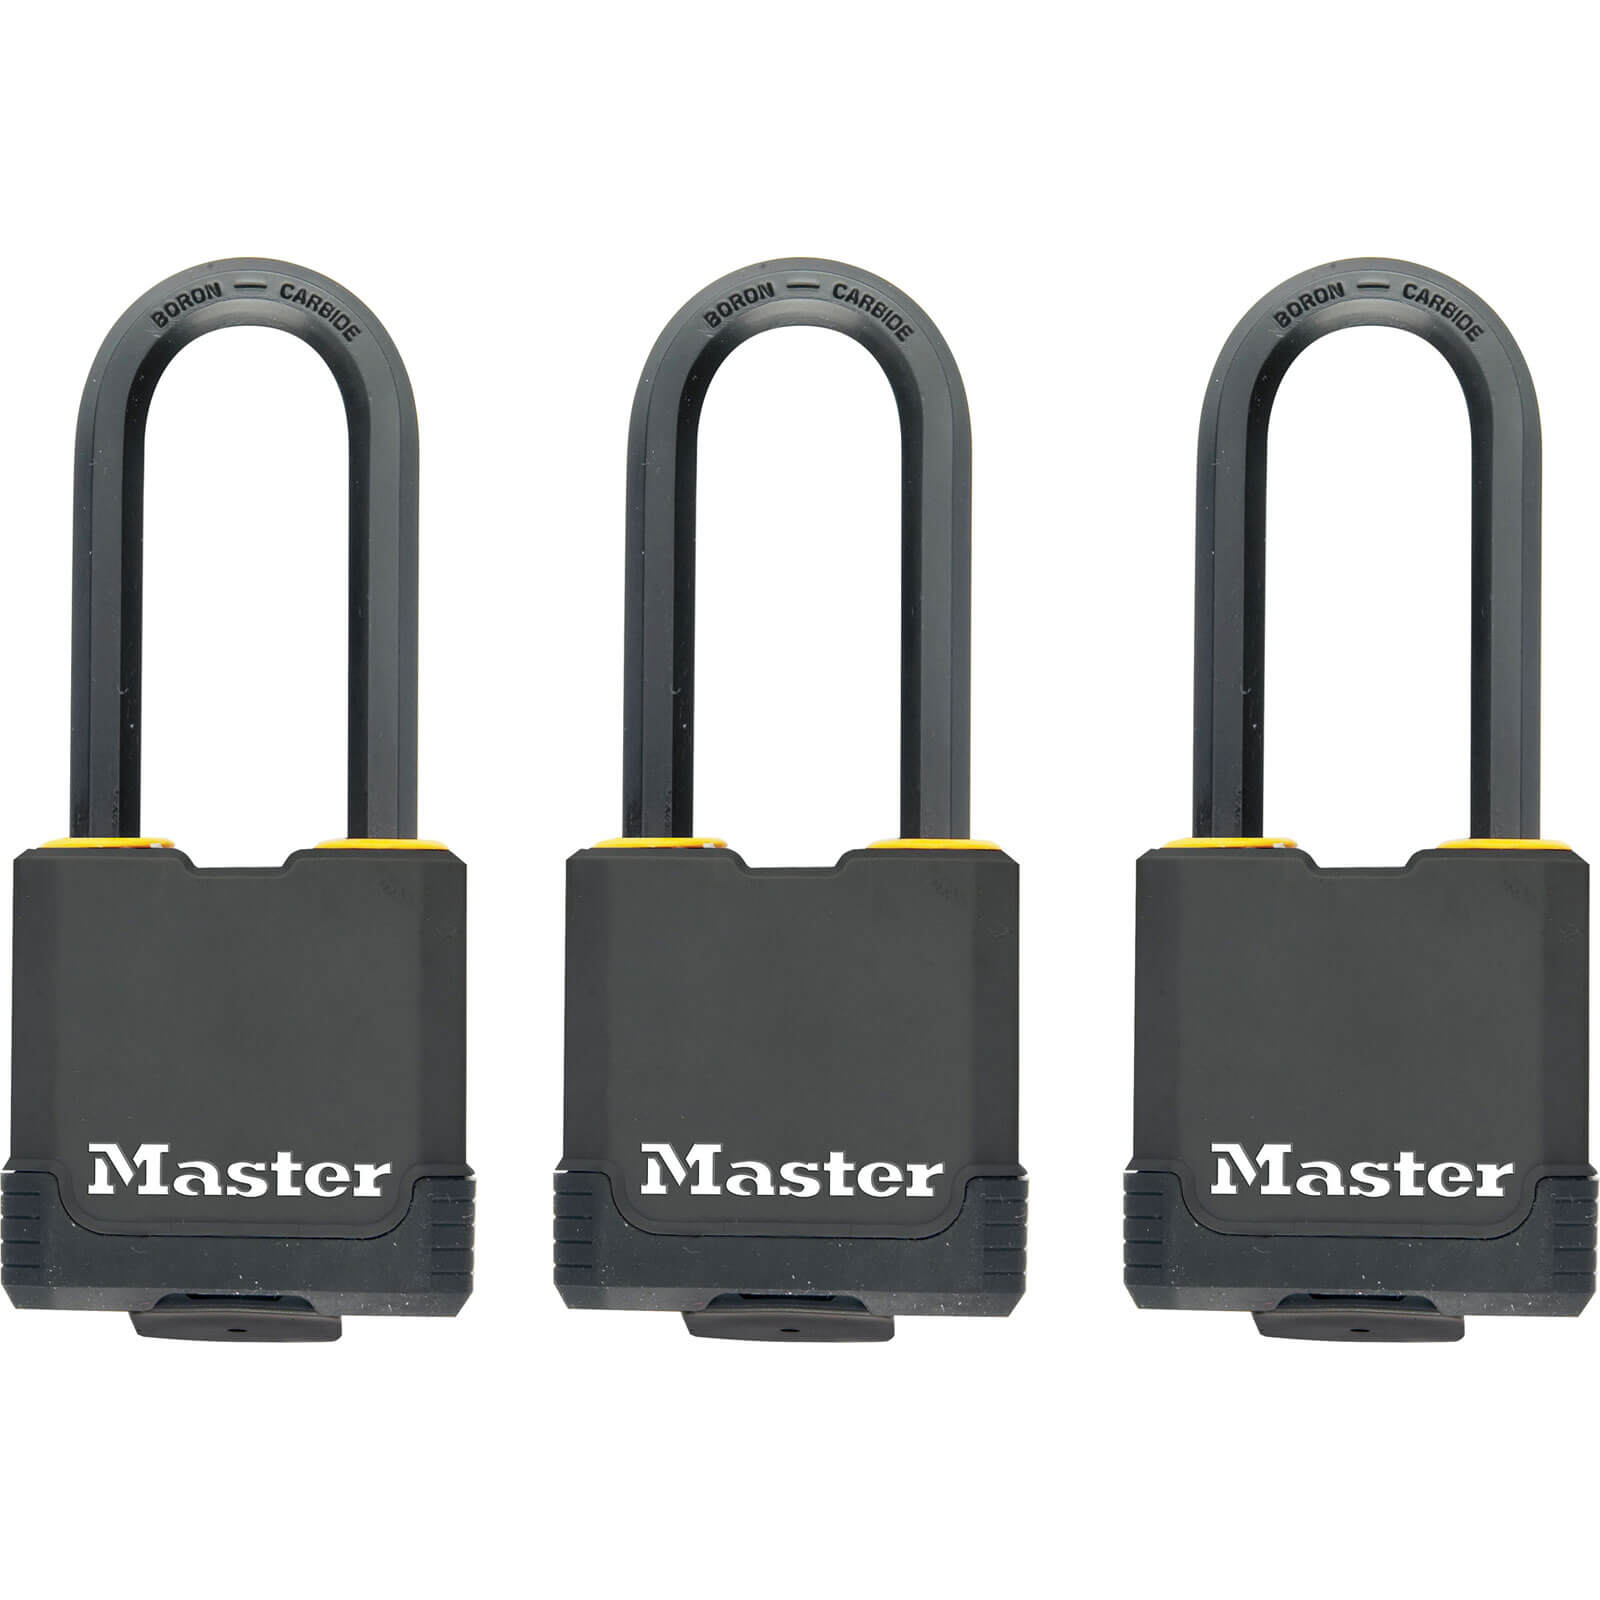 Image of Masterlock Excell Weather Tough Padlock Pack of 3 Keyed Alike 48mm Standard